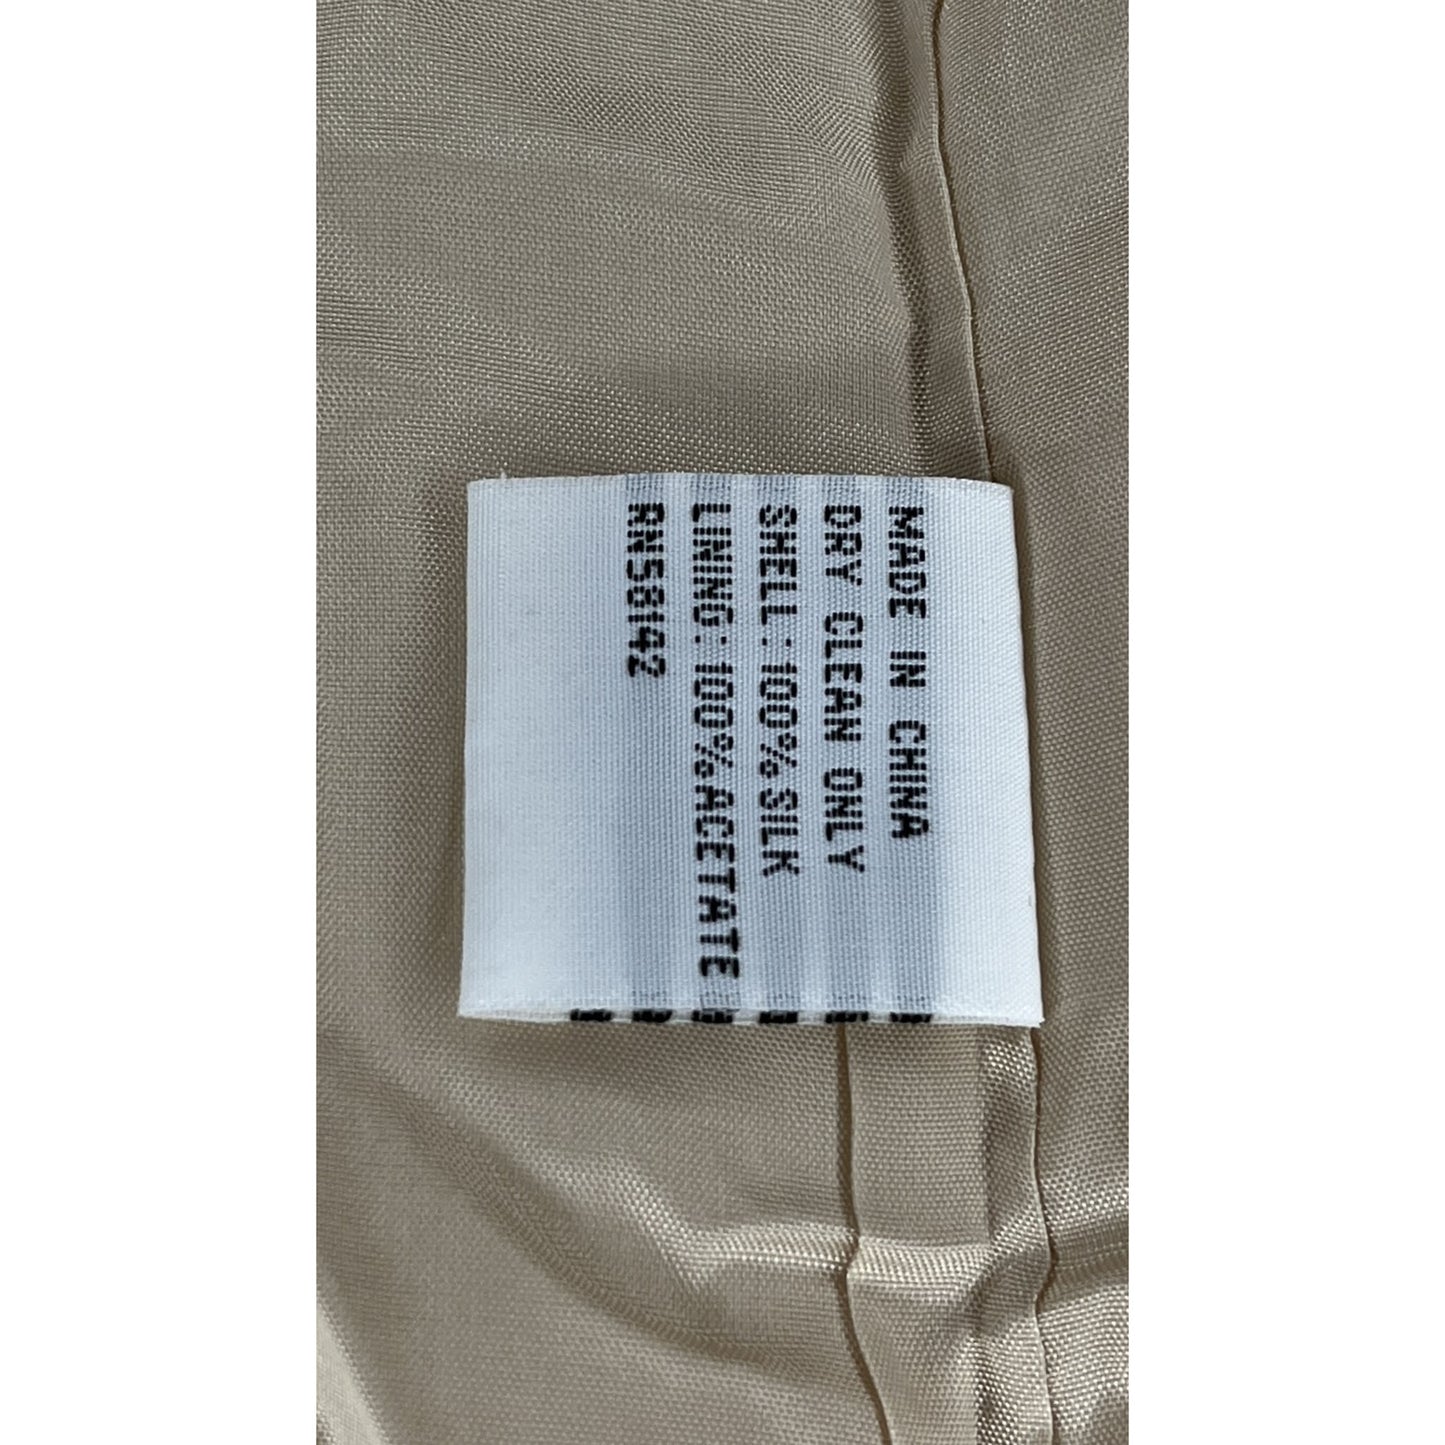 Talbots Dress Sleeveless Floor-Length Tan/ Nude Size 14 SKU 000414